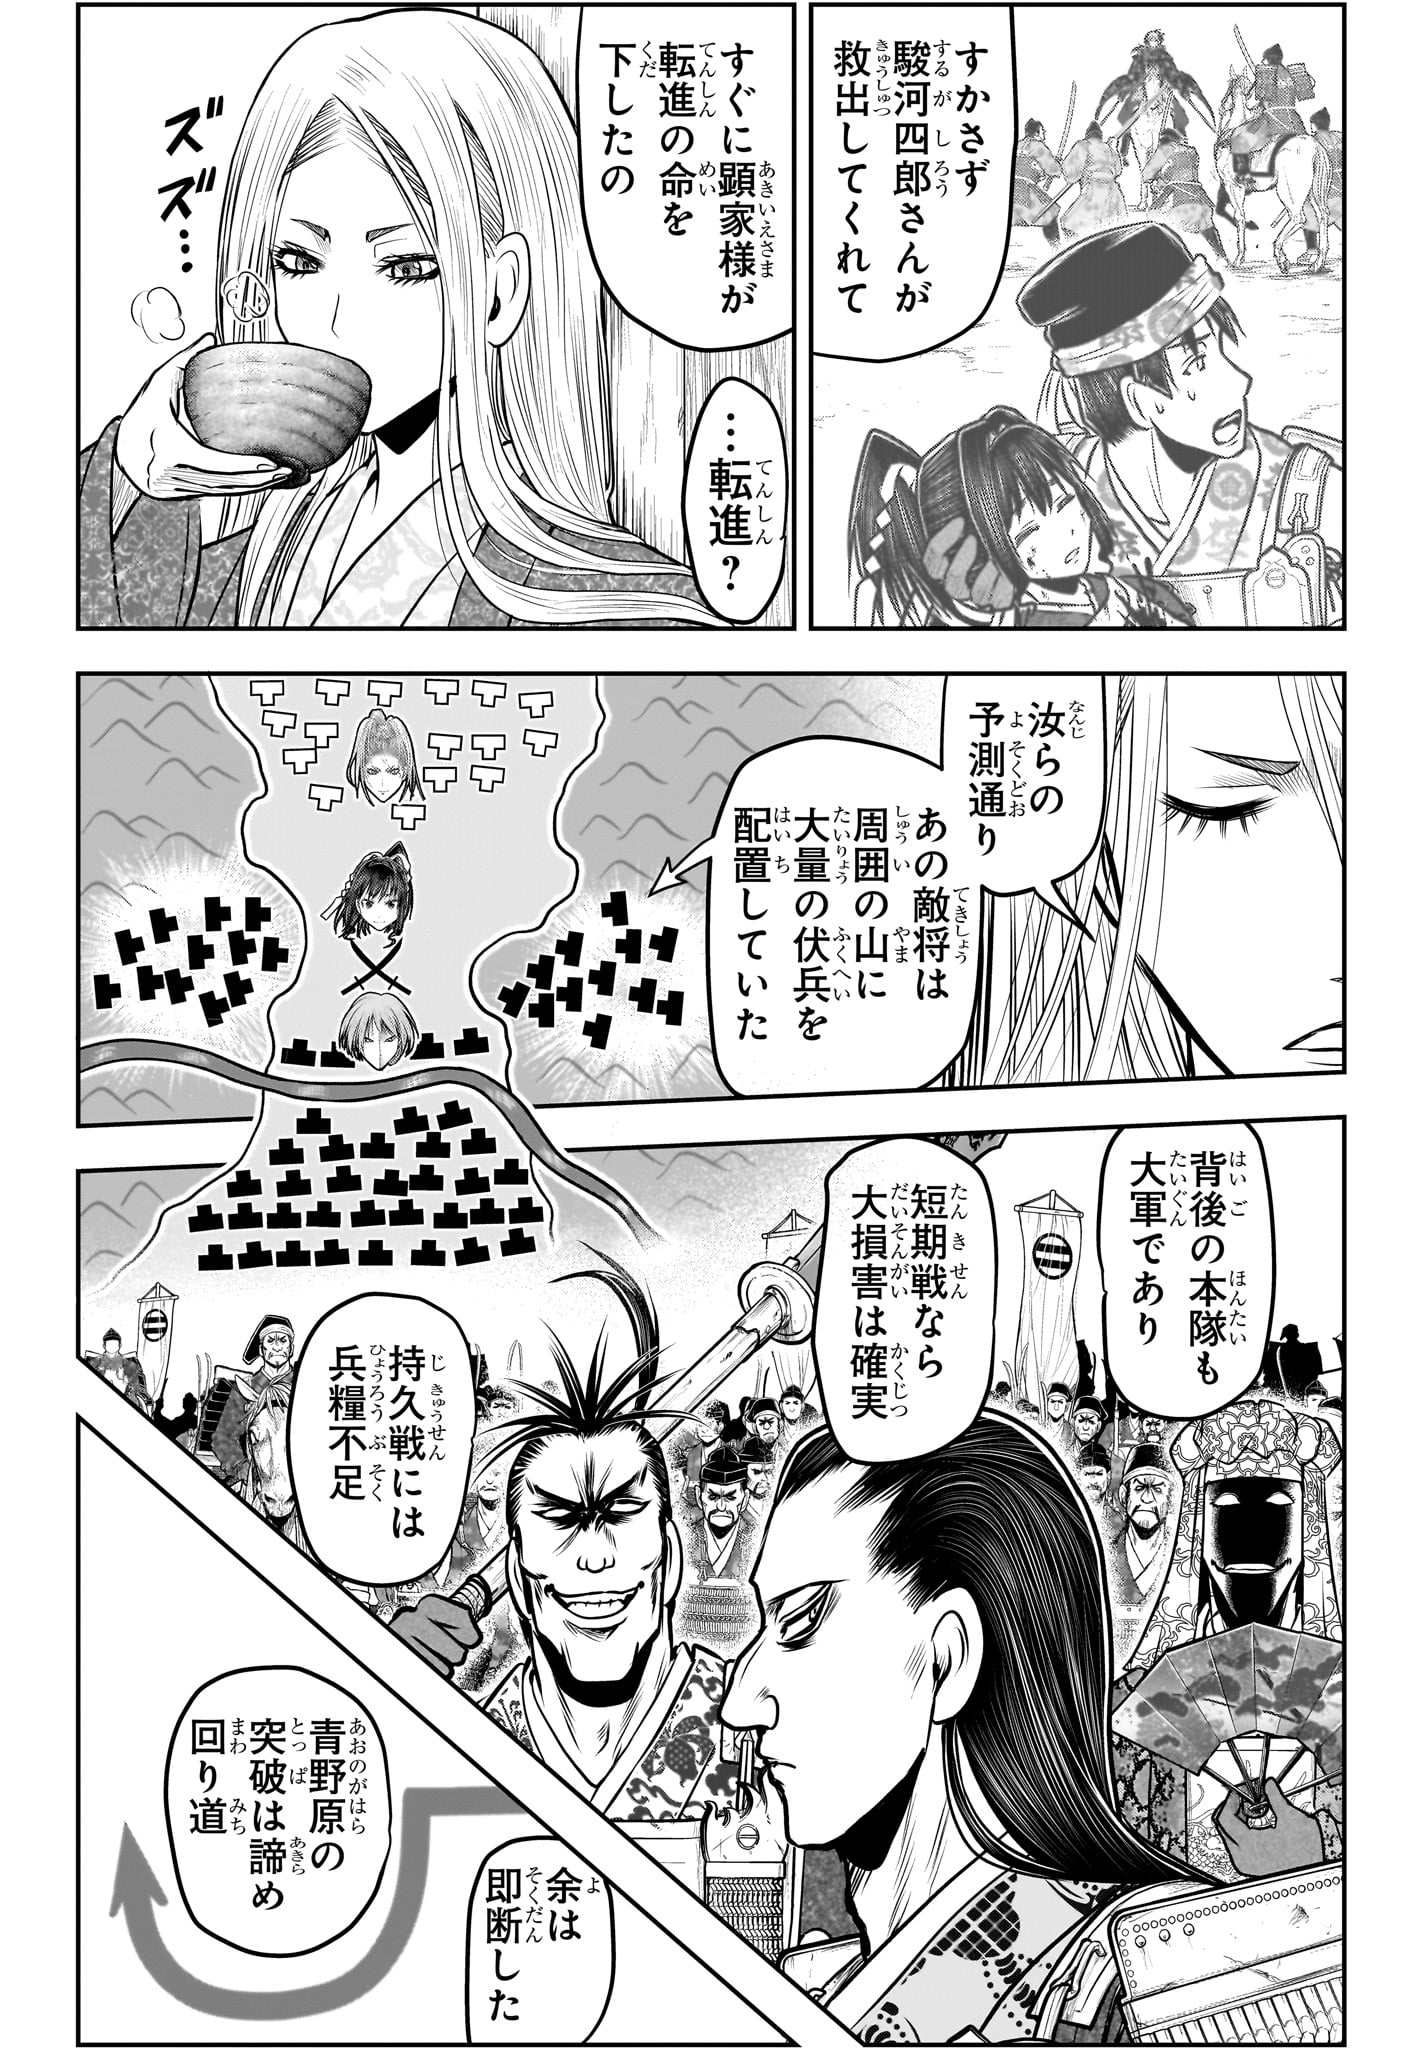 Nige Jouzu no Wakagimi - Chapter 148 - Page 4